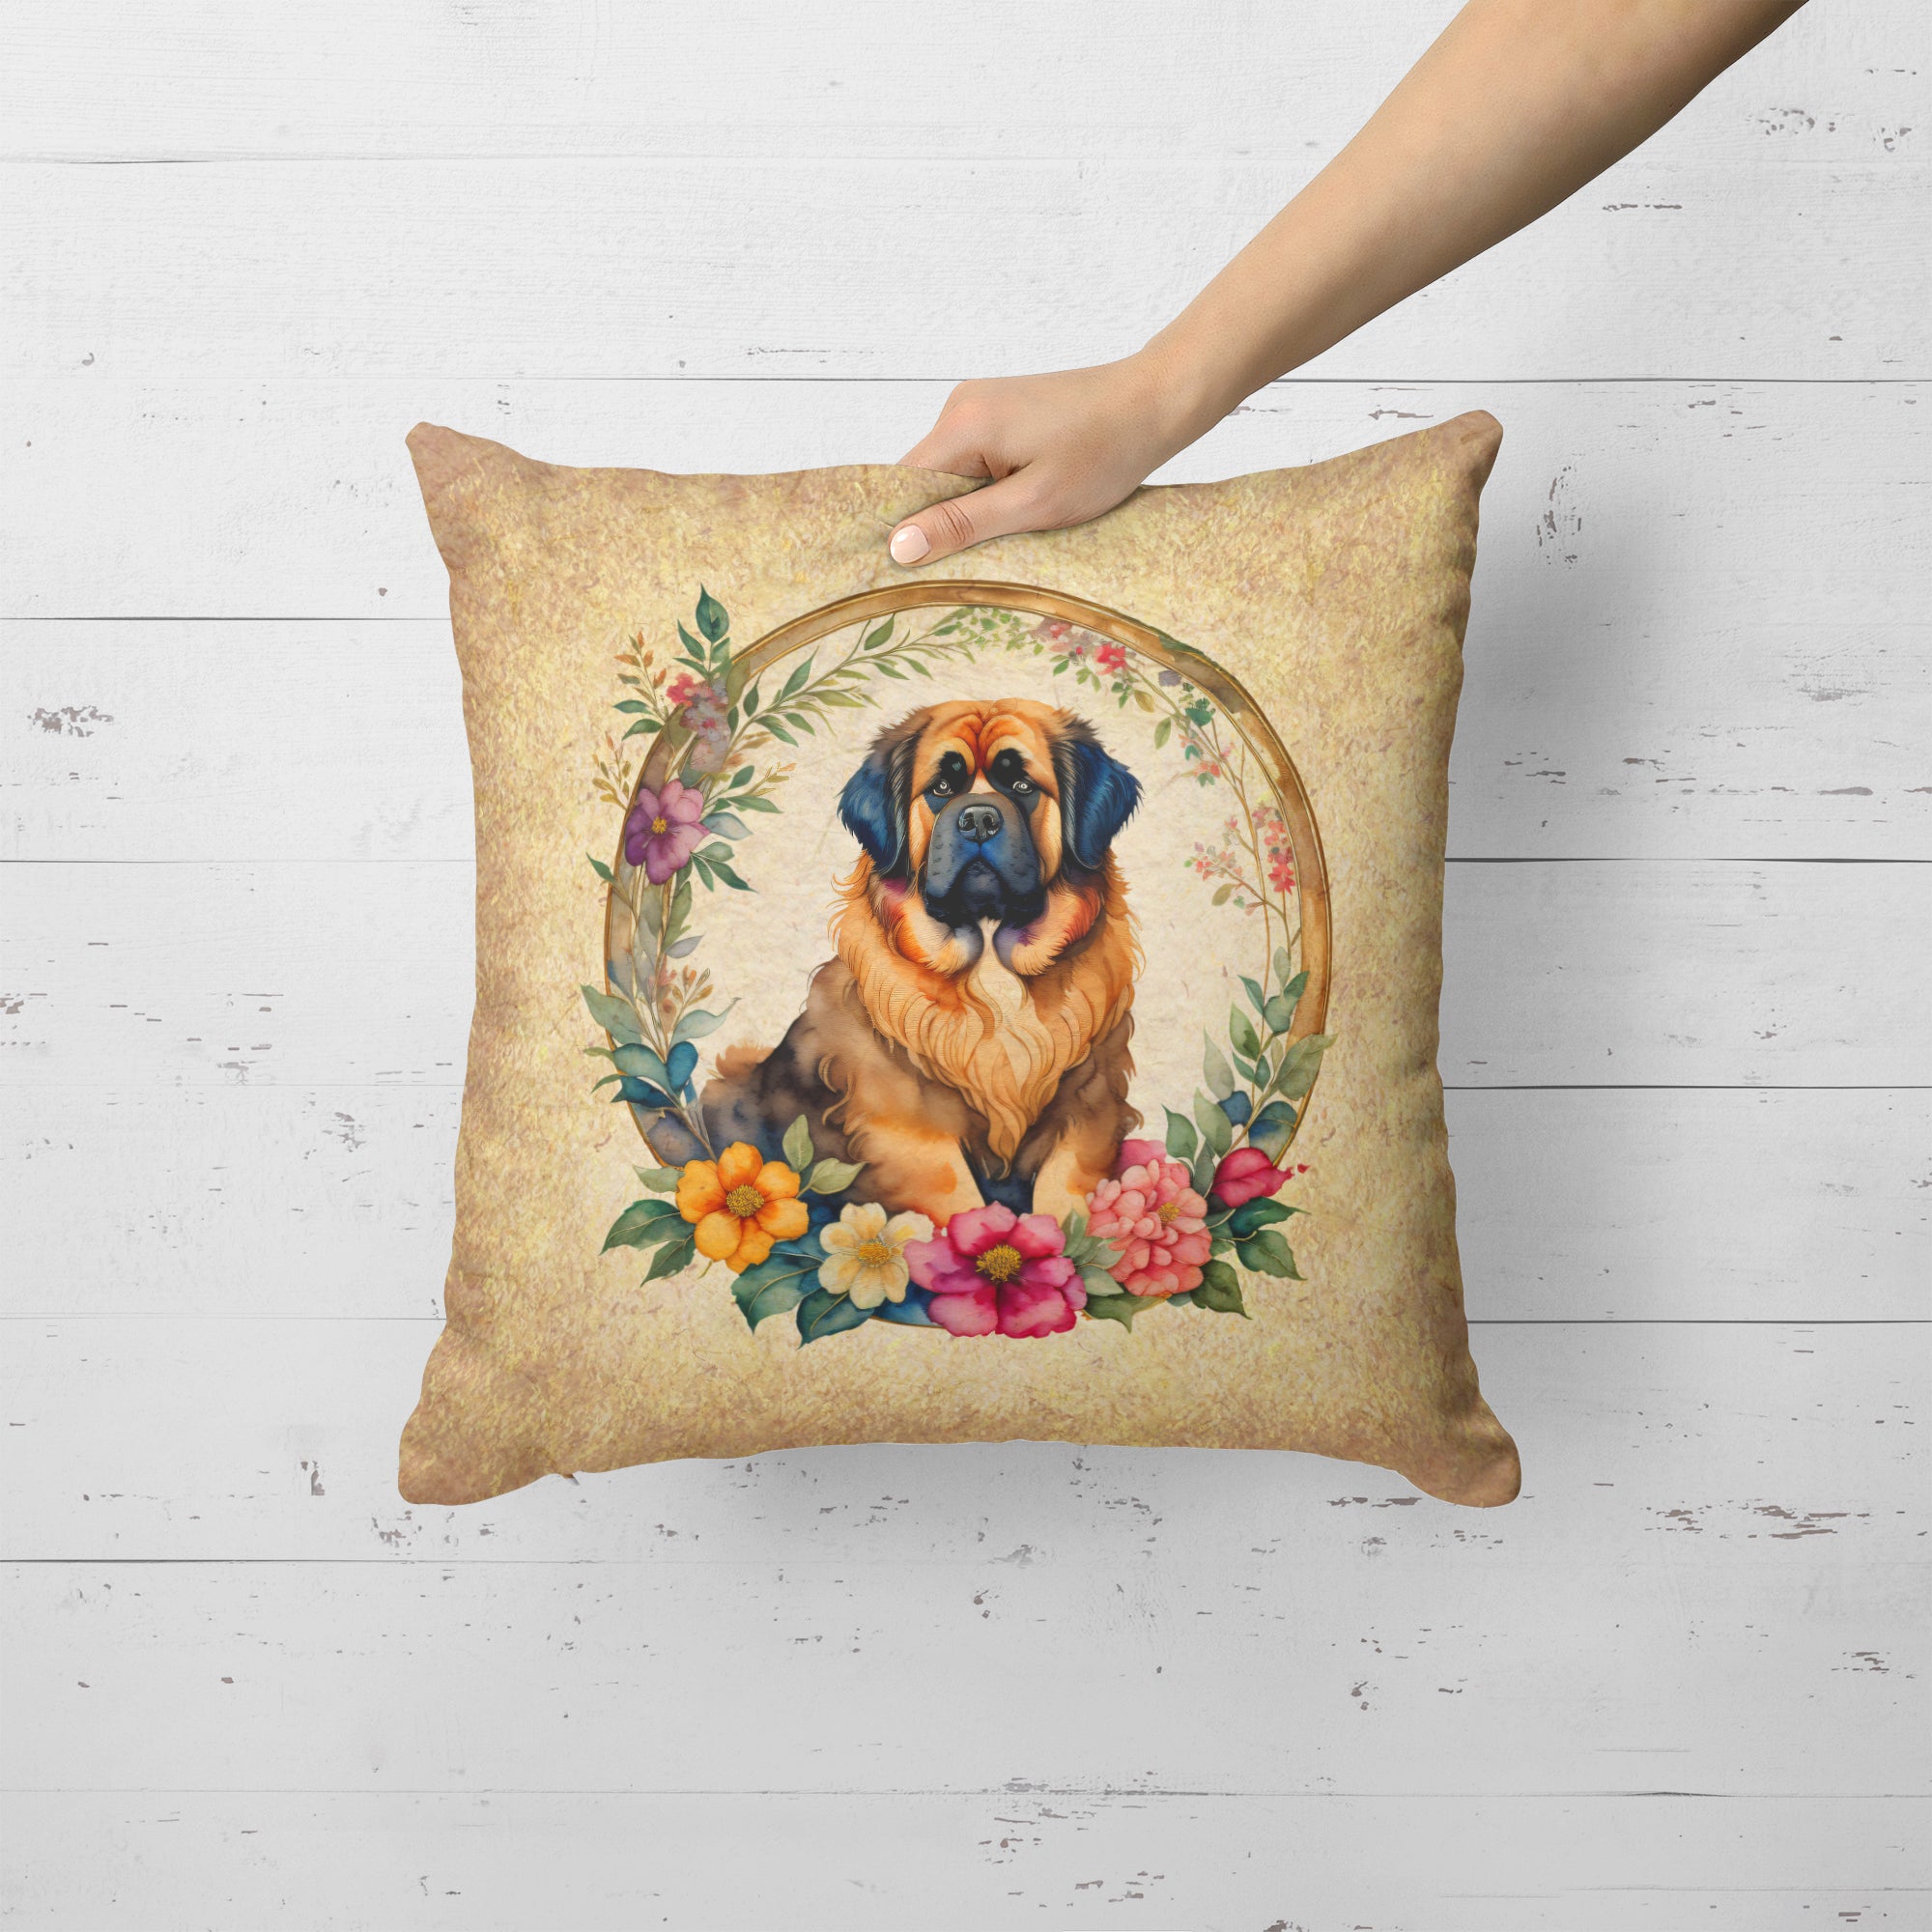 Buy this Tibetan Mastiff and Flowers Fabric Decorative Pillow